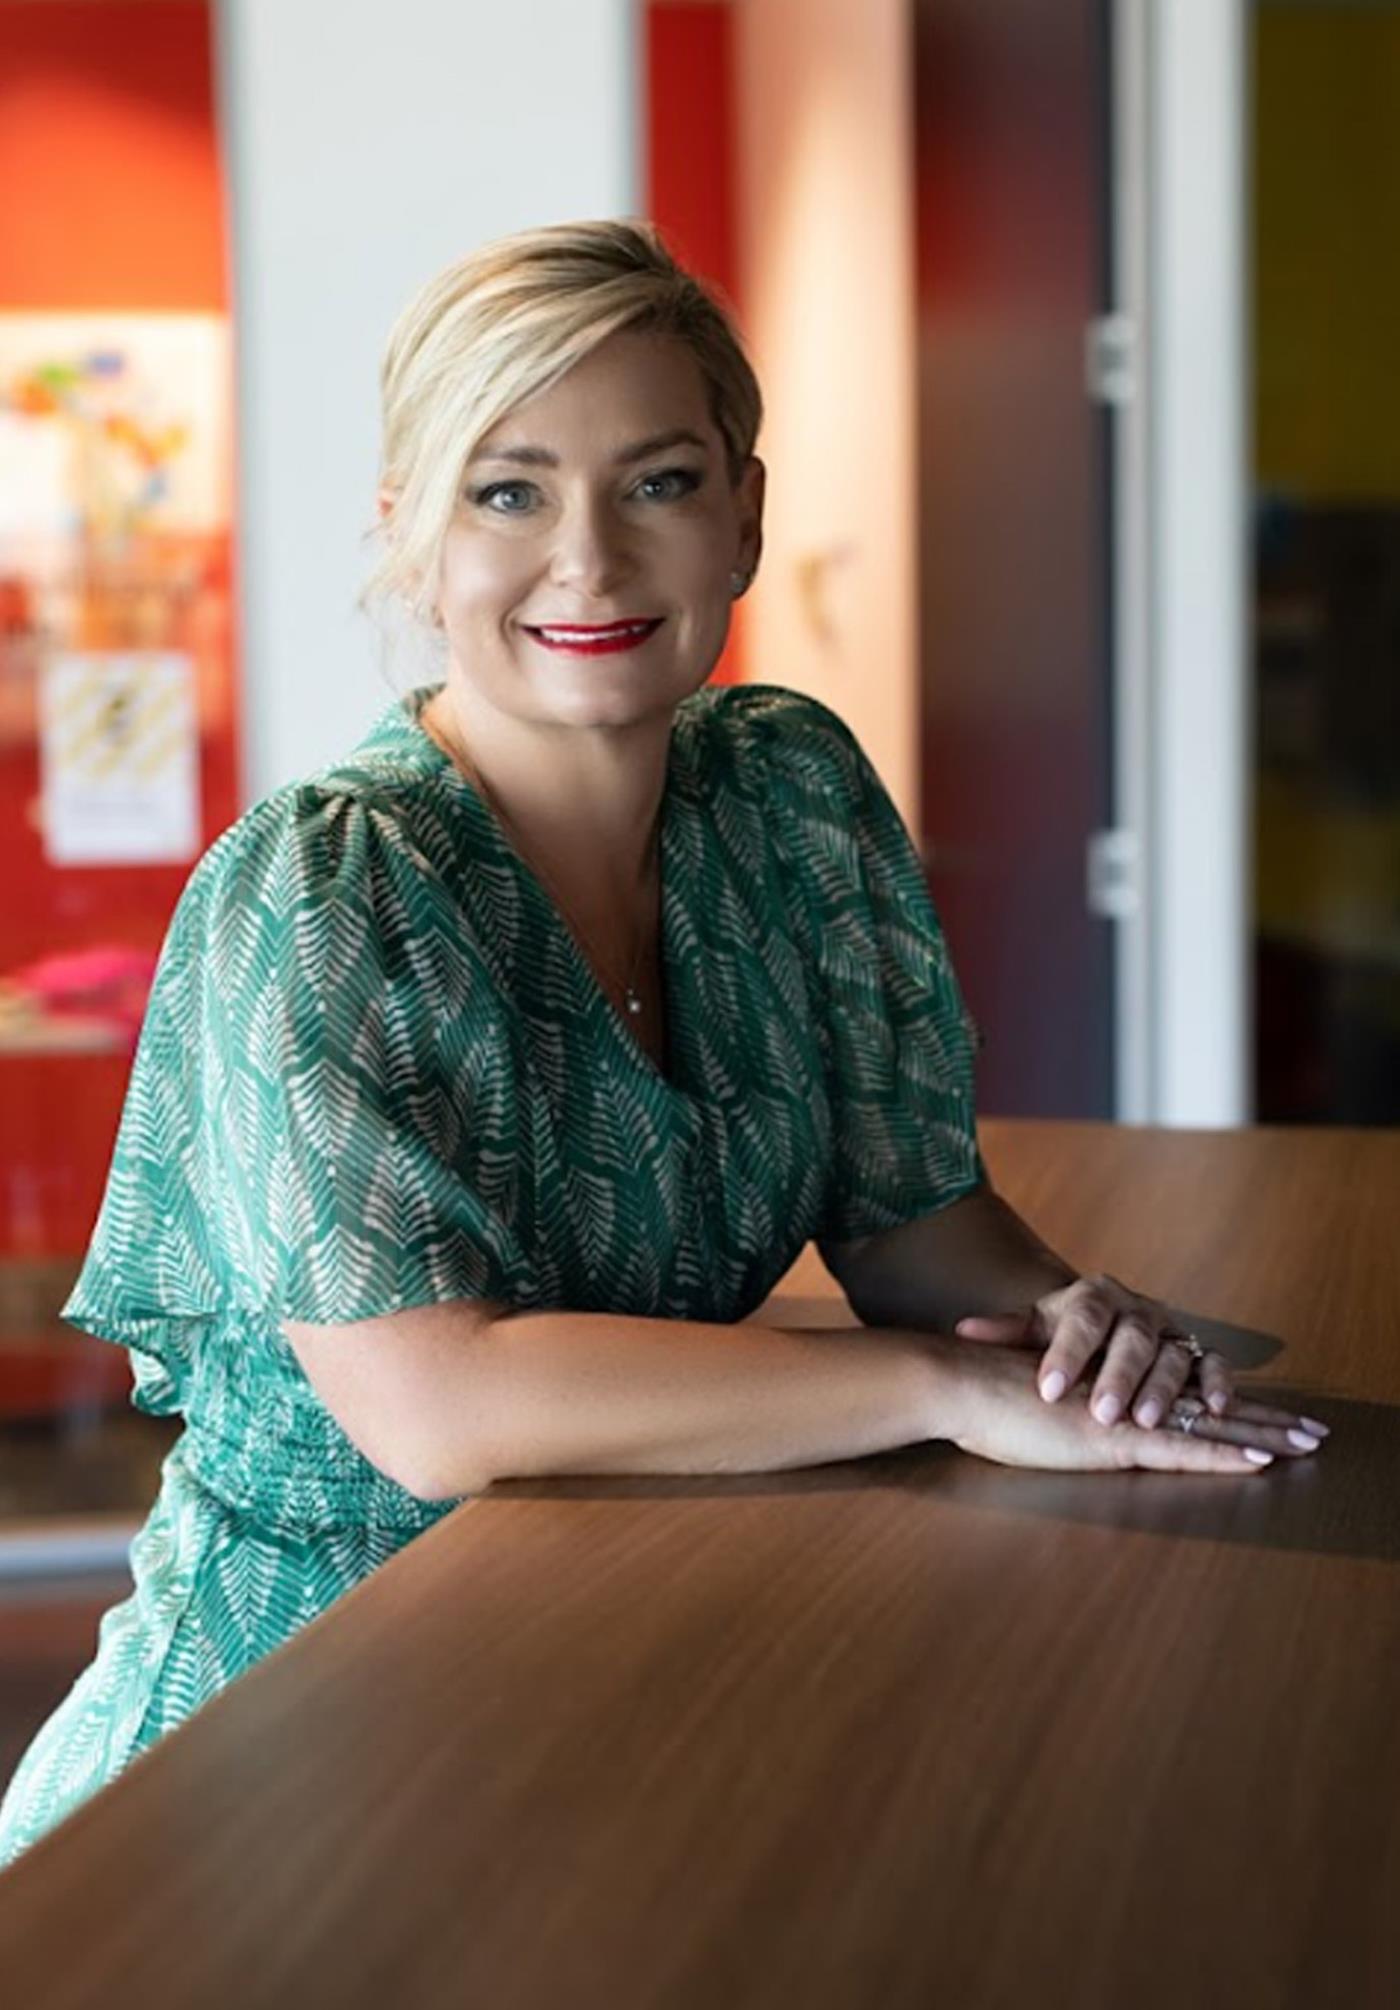 Vanessa Sorenson Managing Director at Microsoft New Zealand